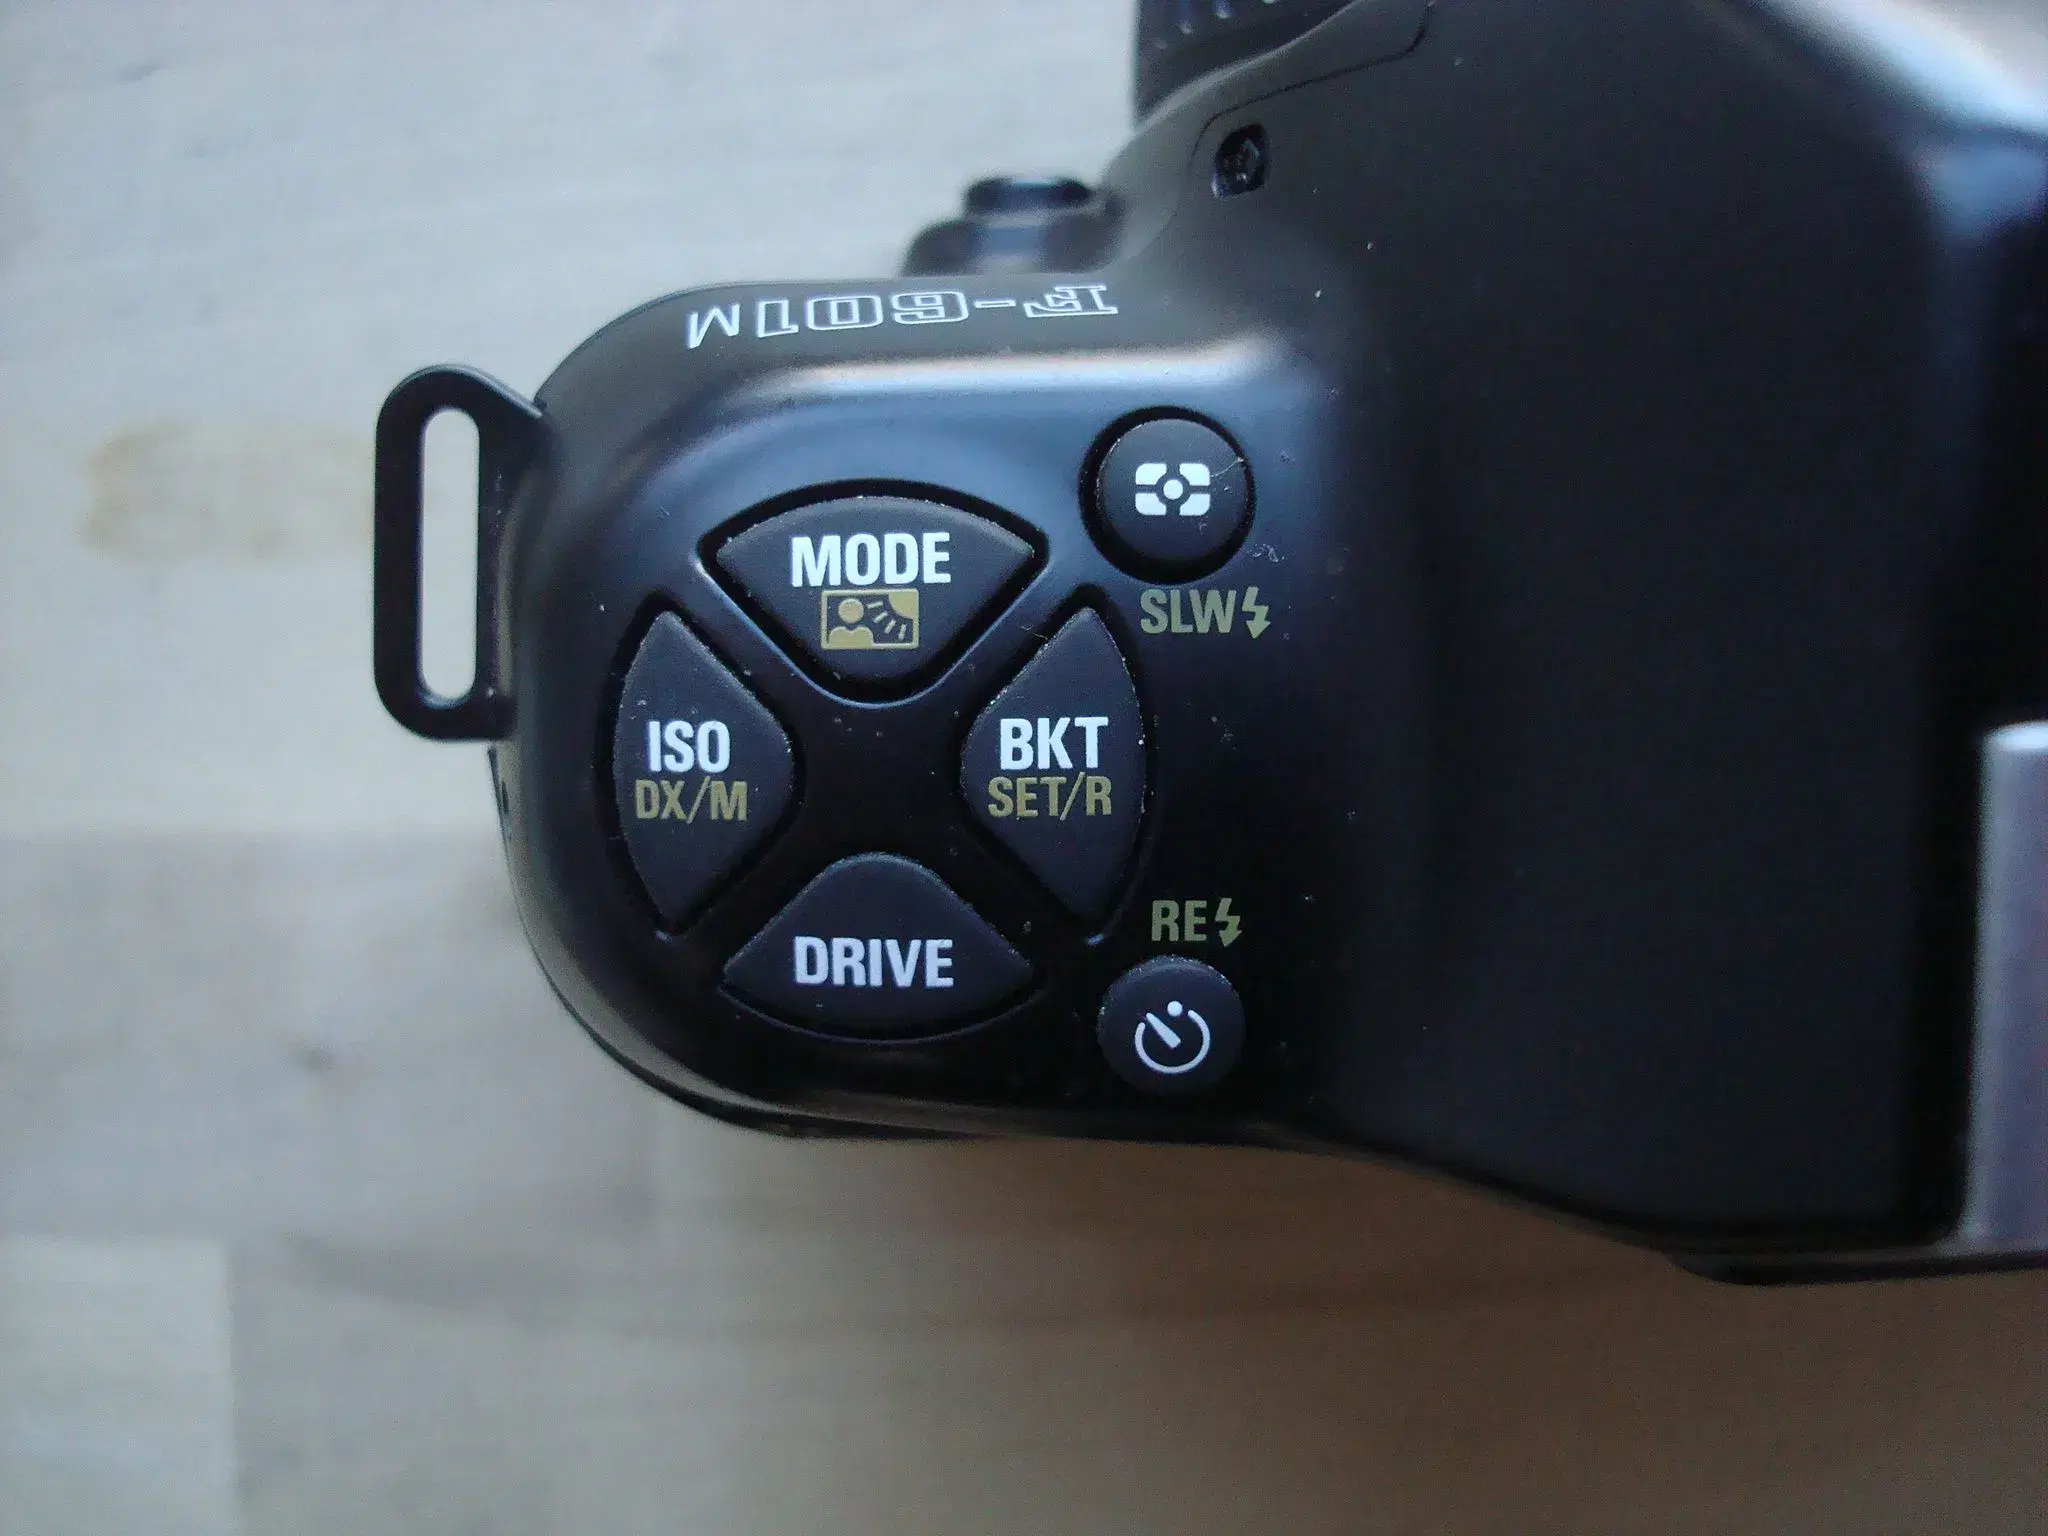 Nikon F-601m kamerahus evt med zoom